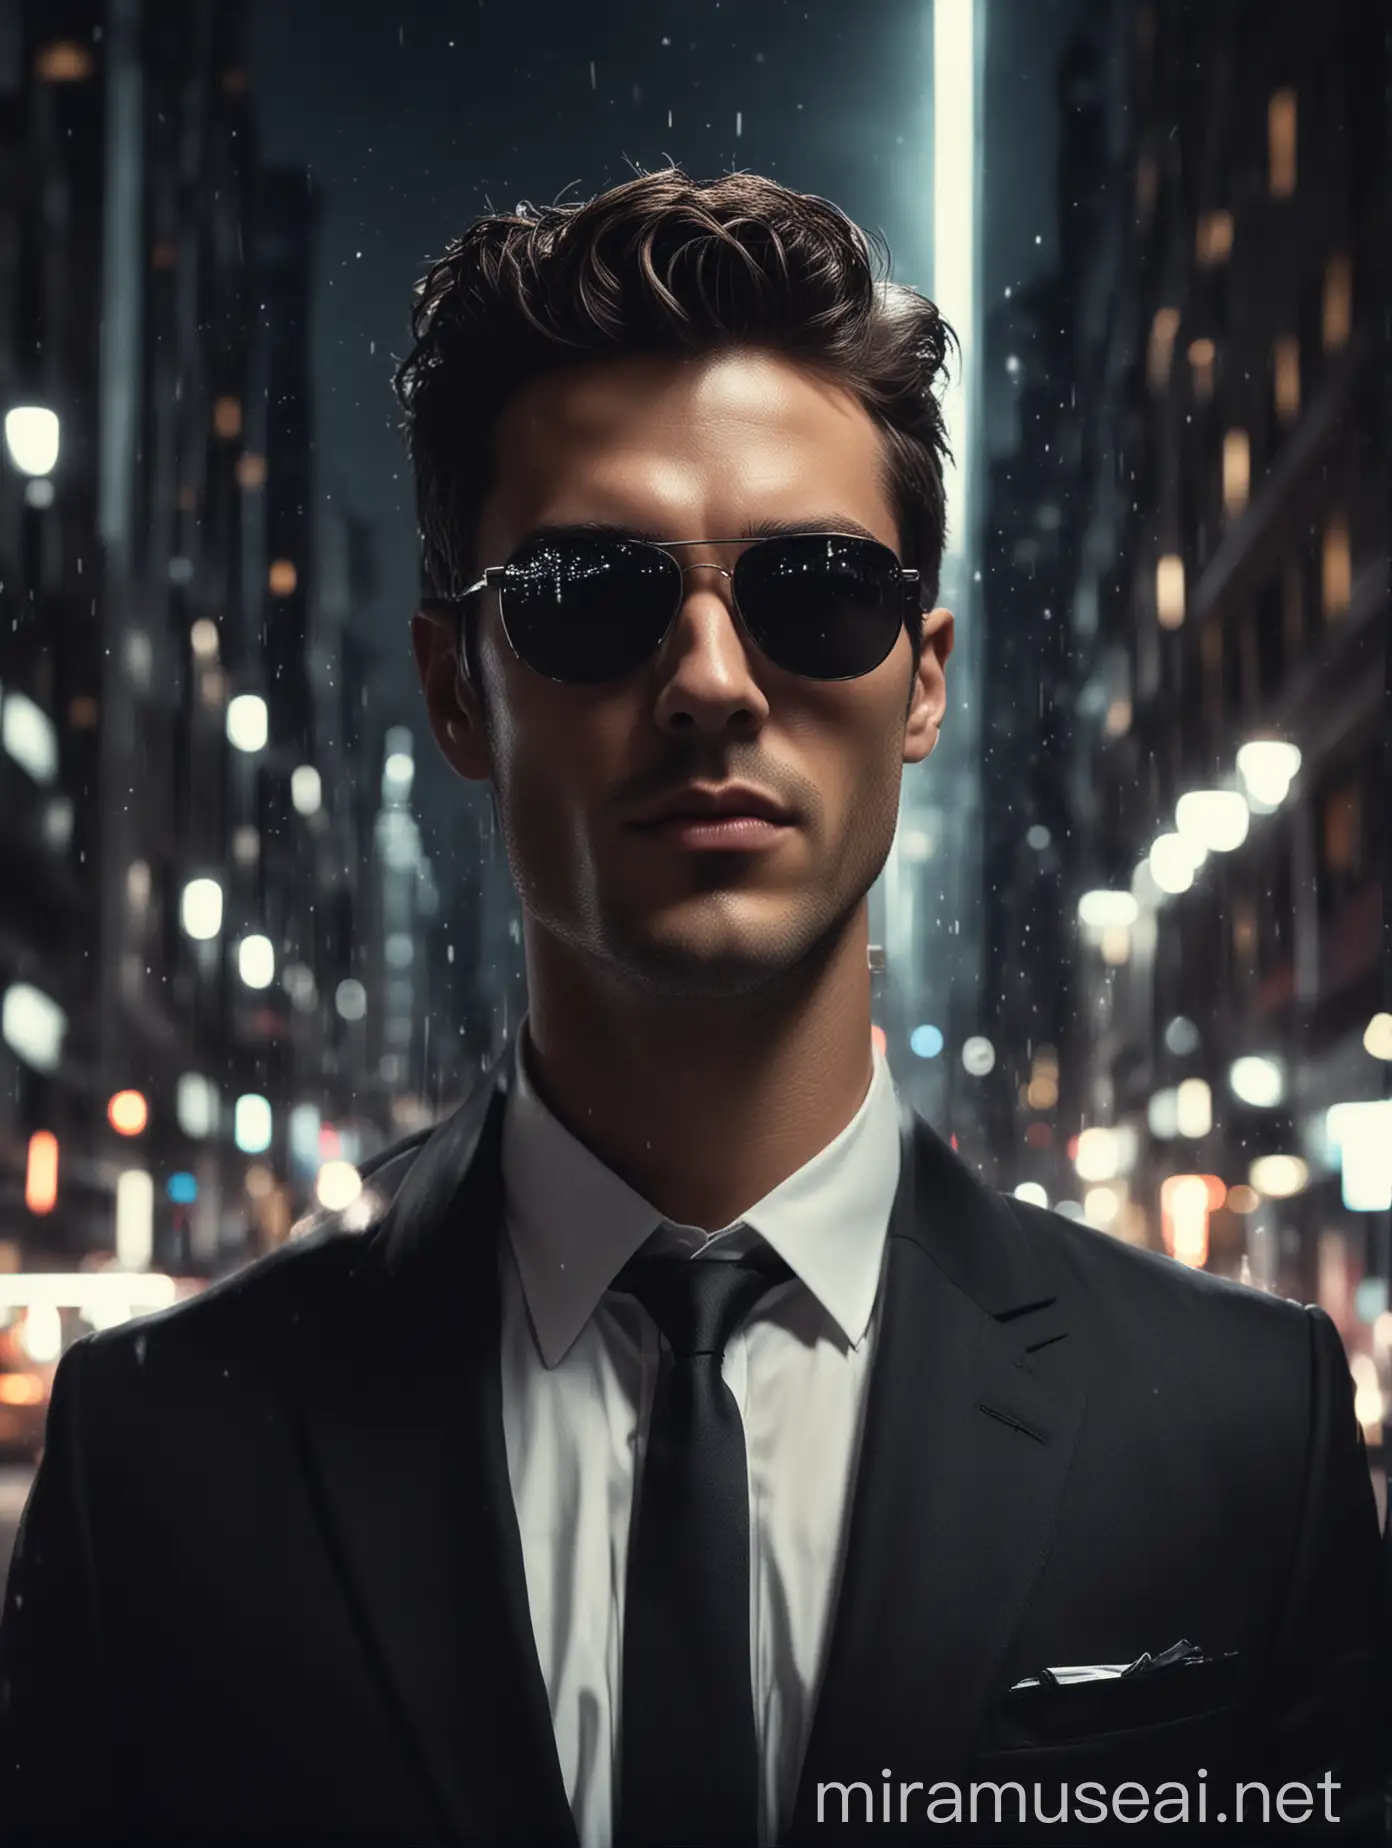 Stylish Man in Suit with Luminous Lights in Urban Night Scene